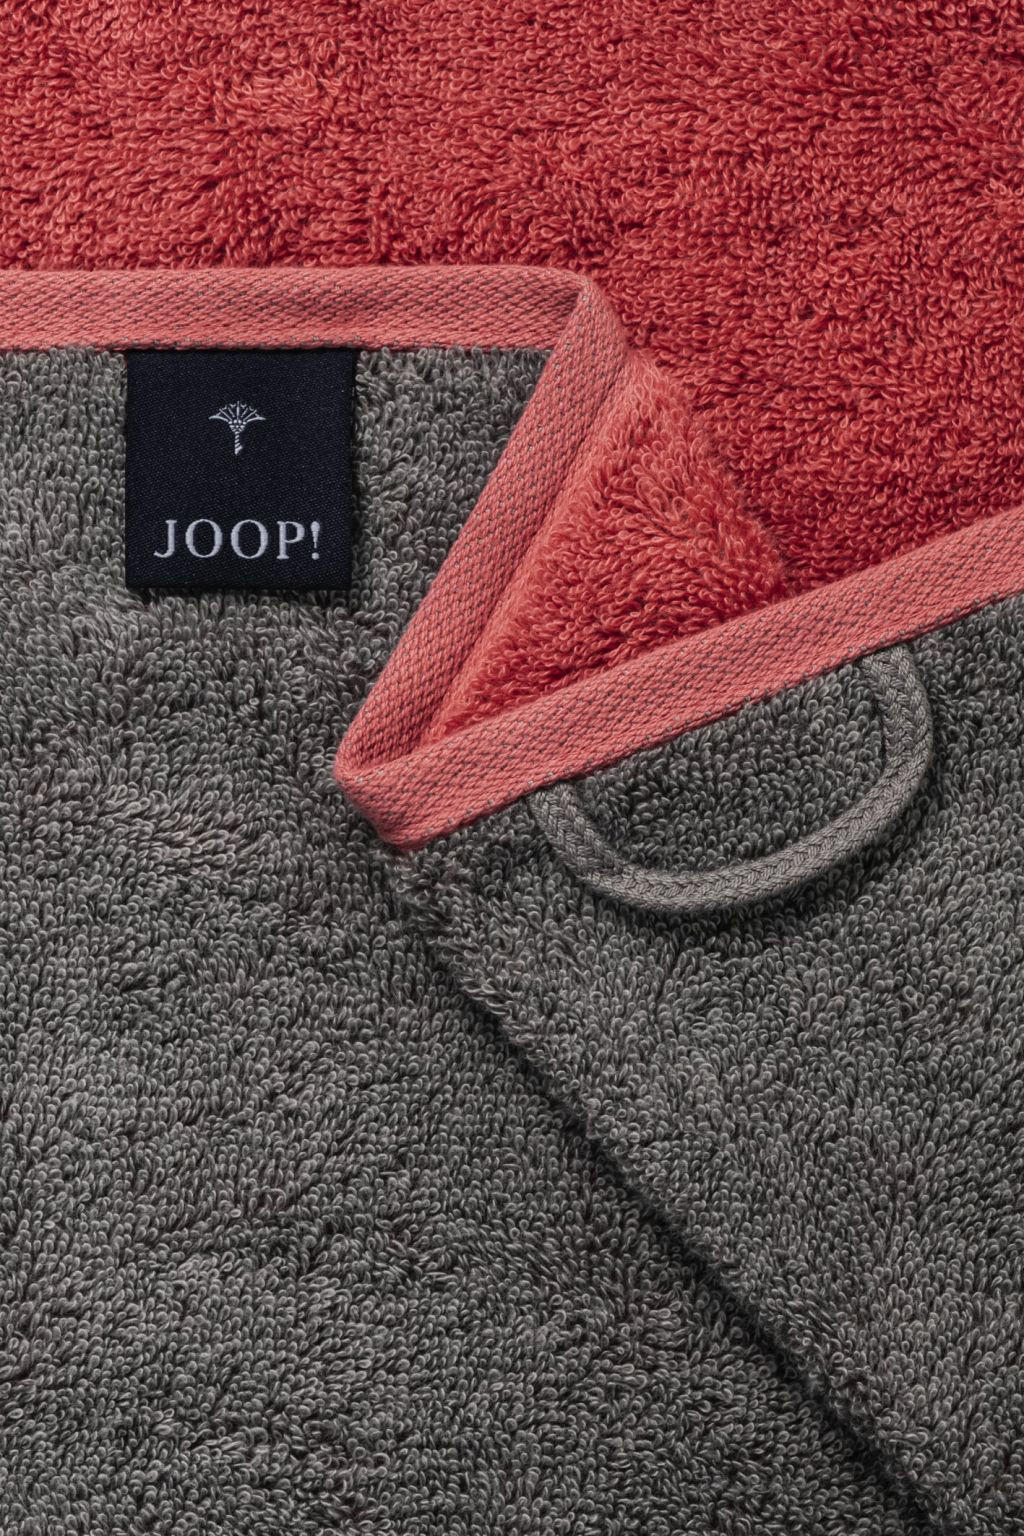 HANDTUCH JOOP! SHADES  - Rot, Basics, Textil (50/100cm) - Joop!